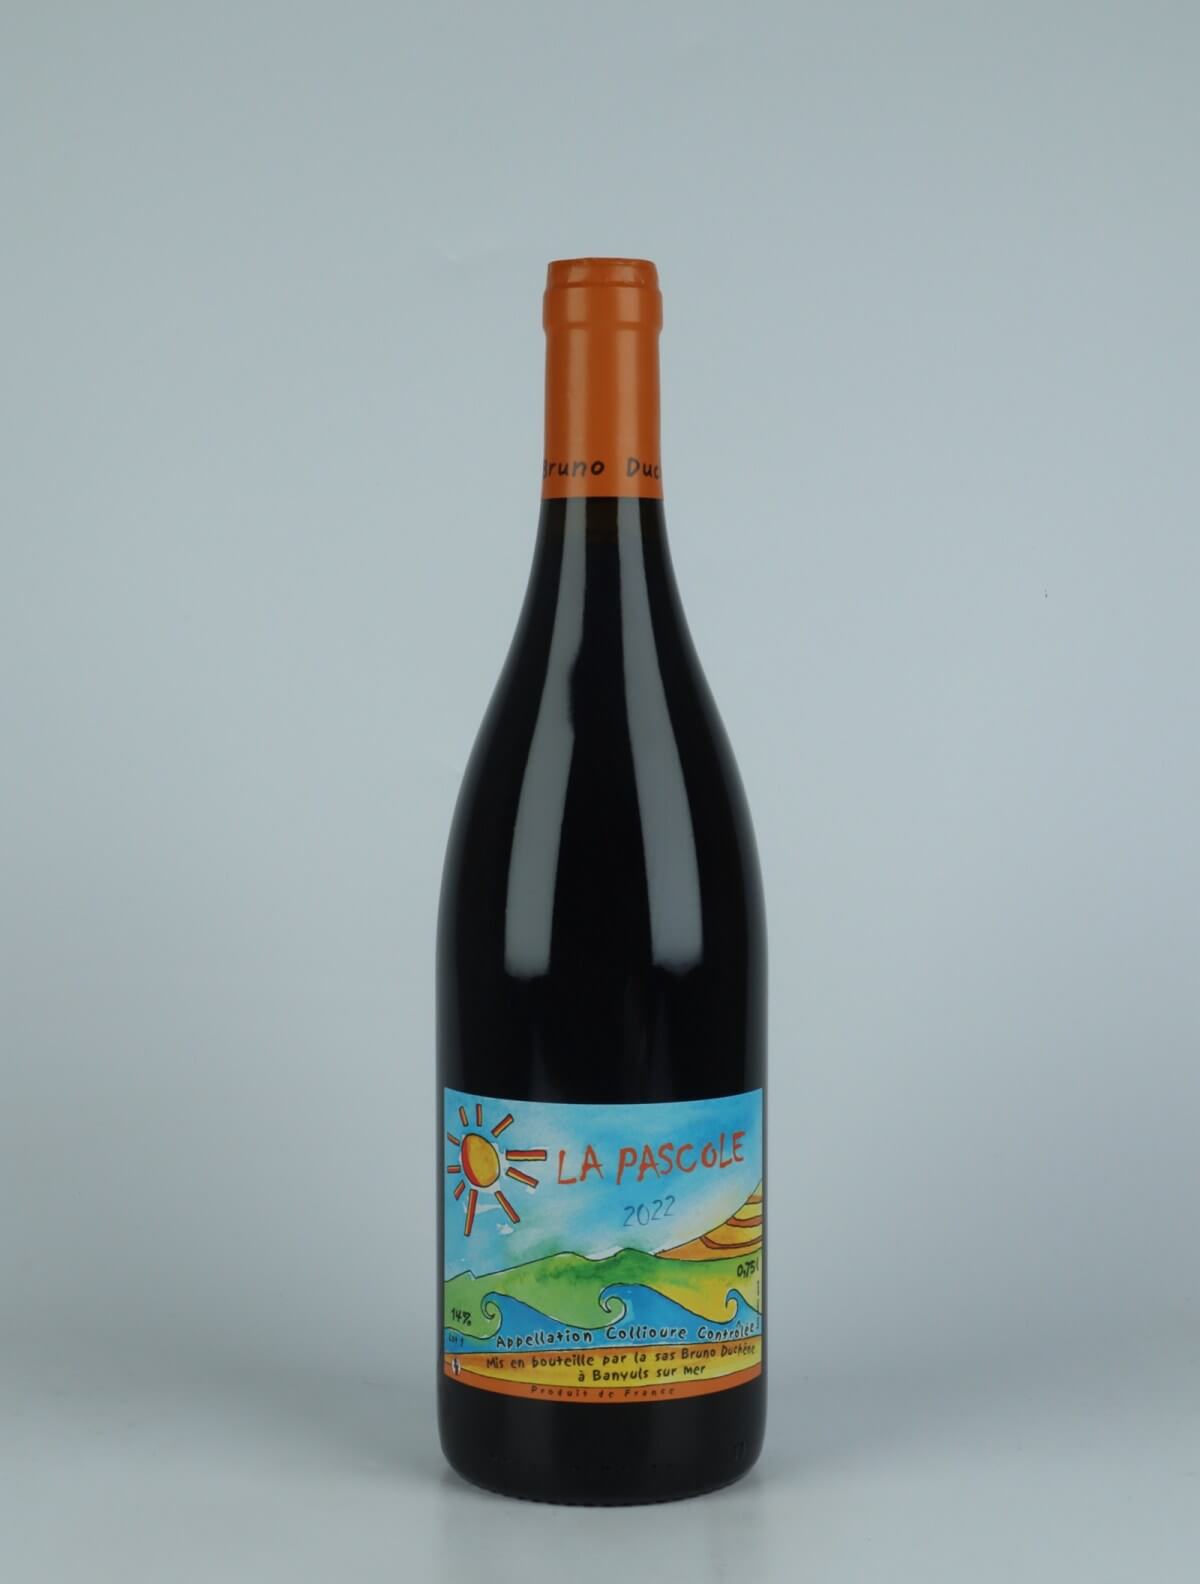 A bottle 2022 La Pascole Red wine from Bruno Duchêne, Rousillon in France